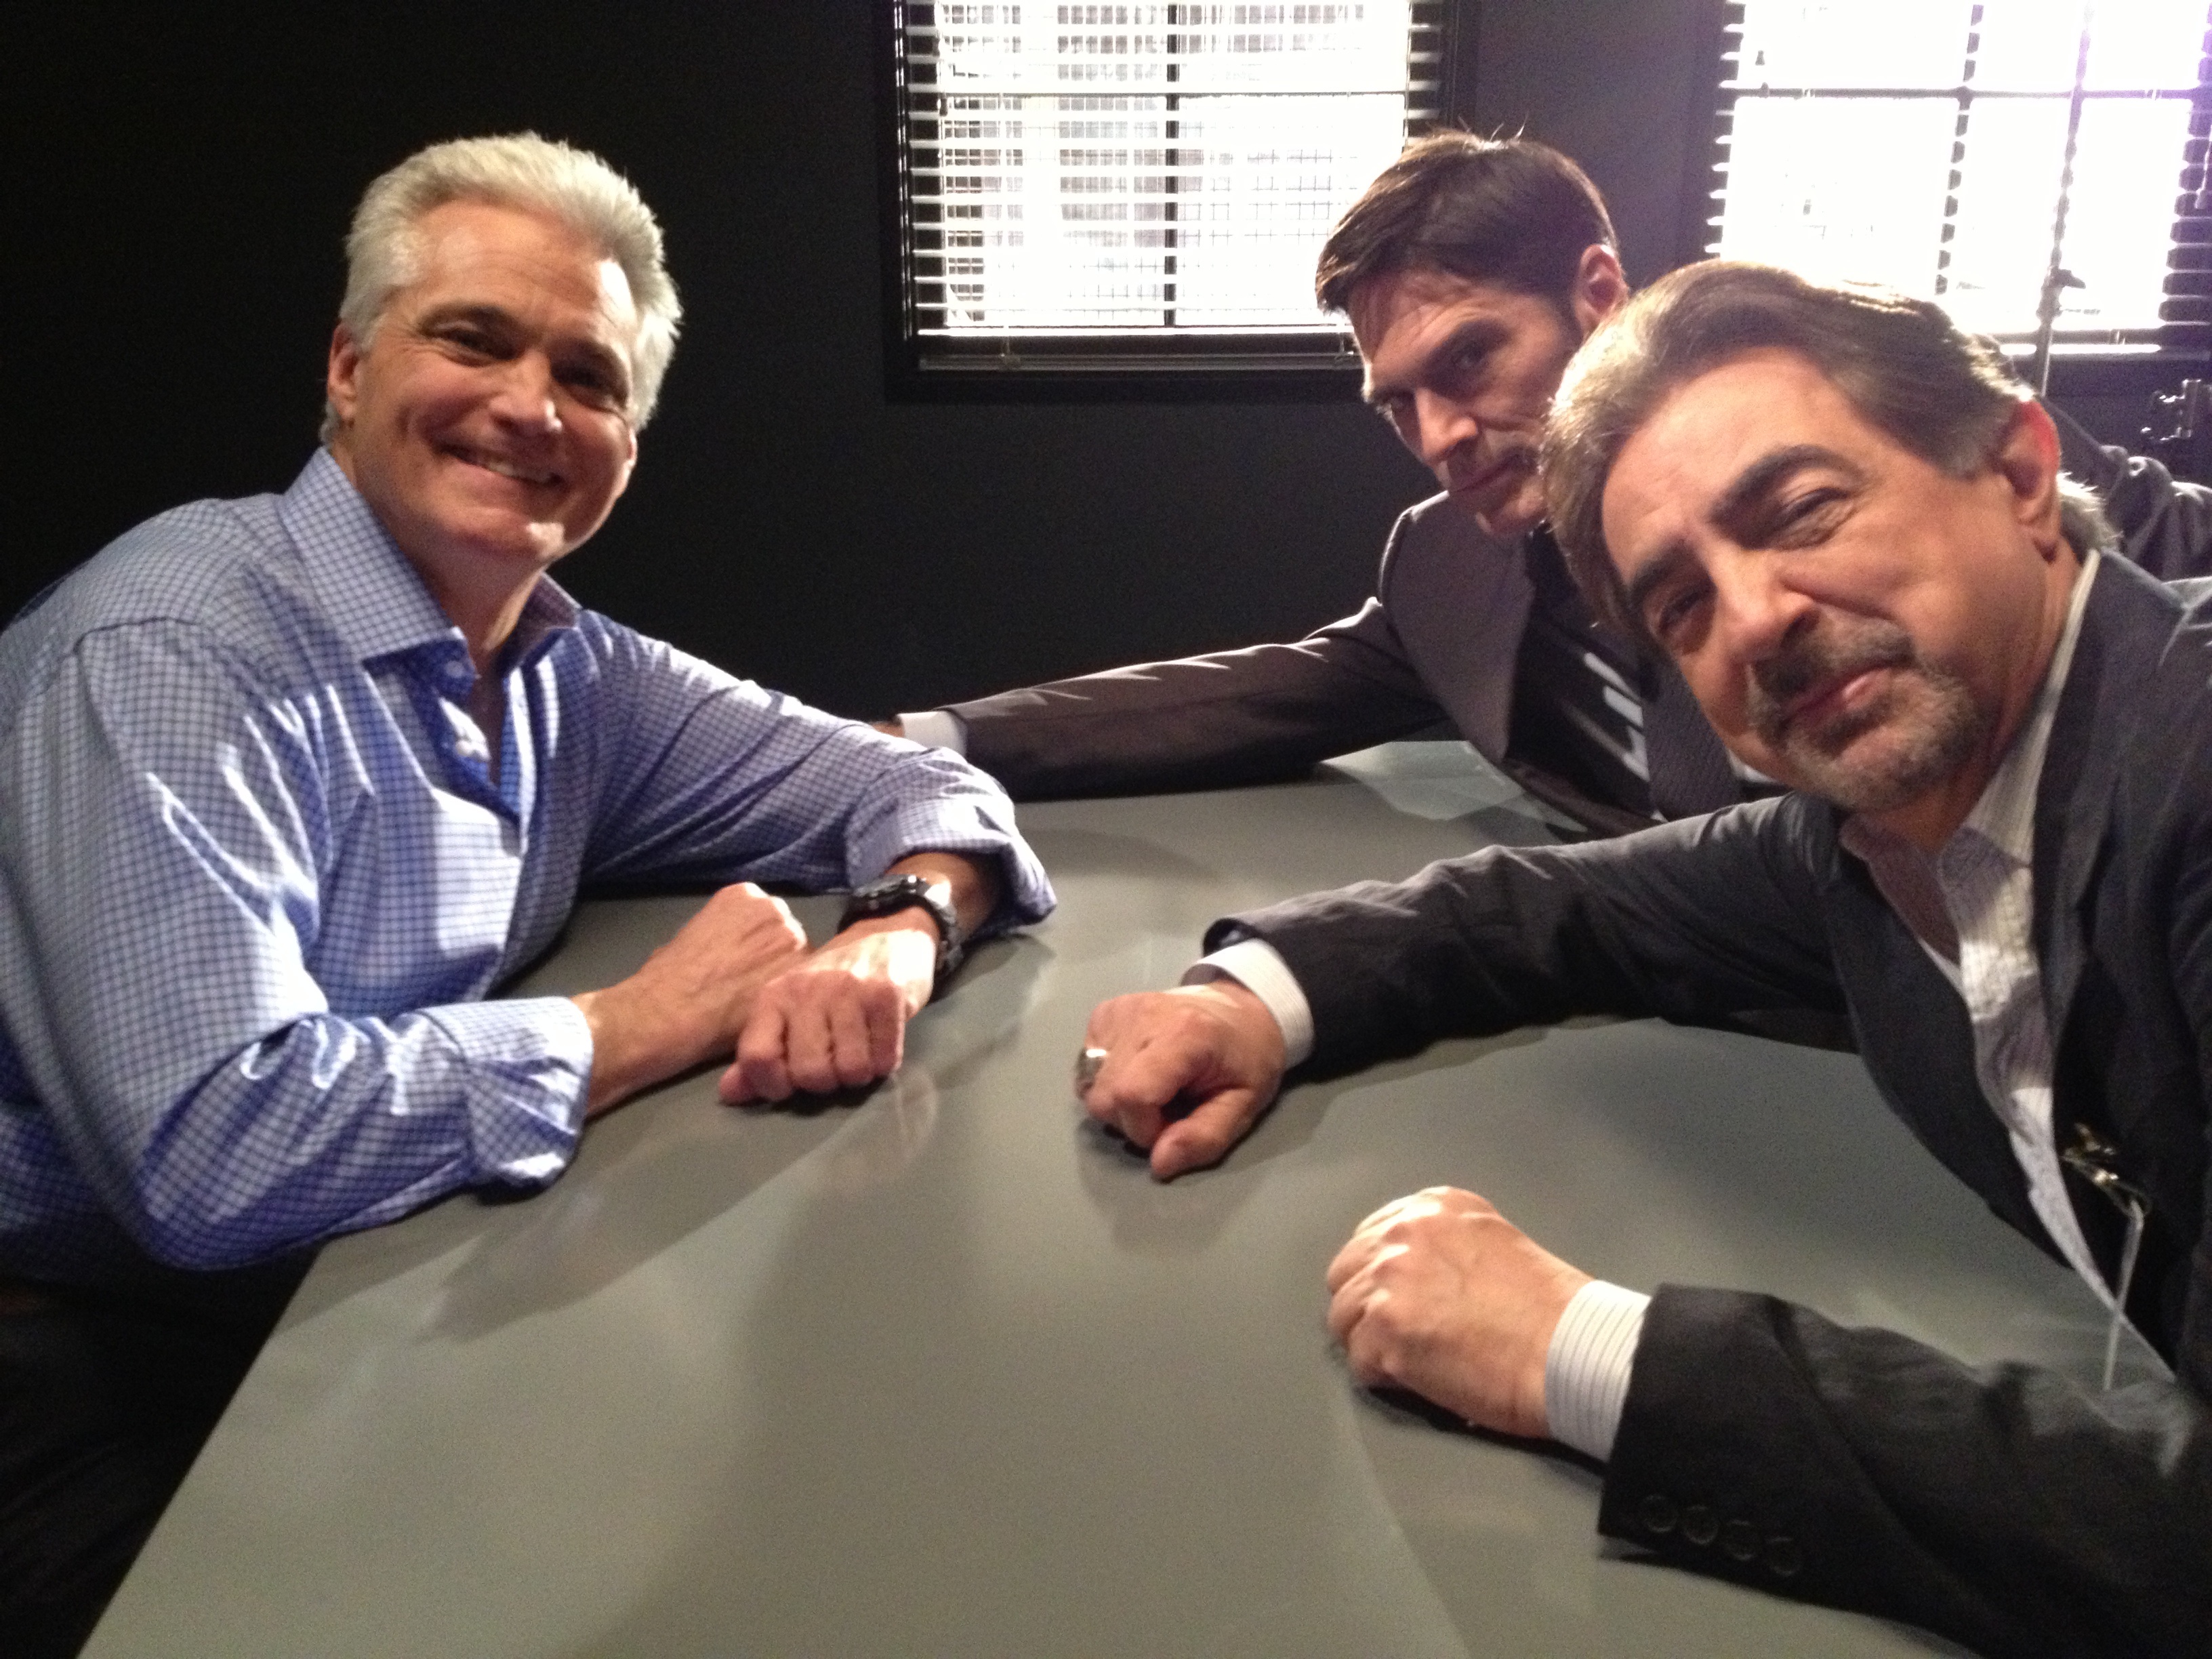 Criminal Minds as Dr. Calder with Thomas Gibson and Joe Mantegna